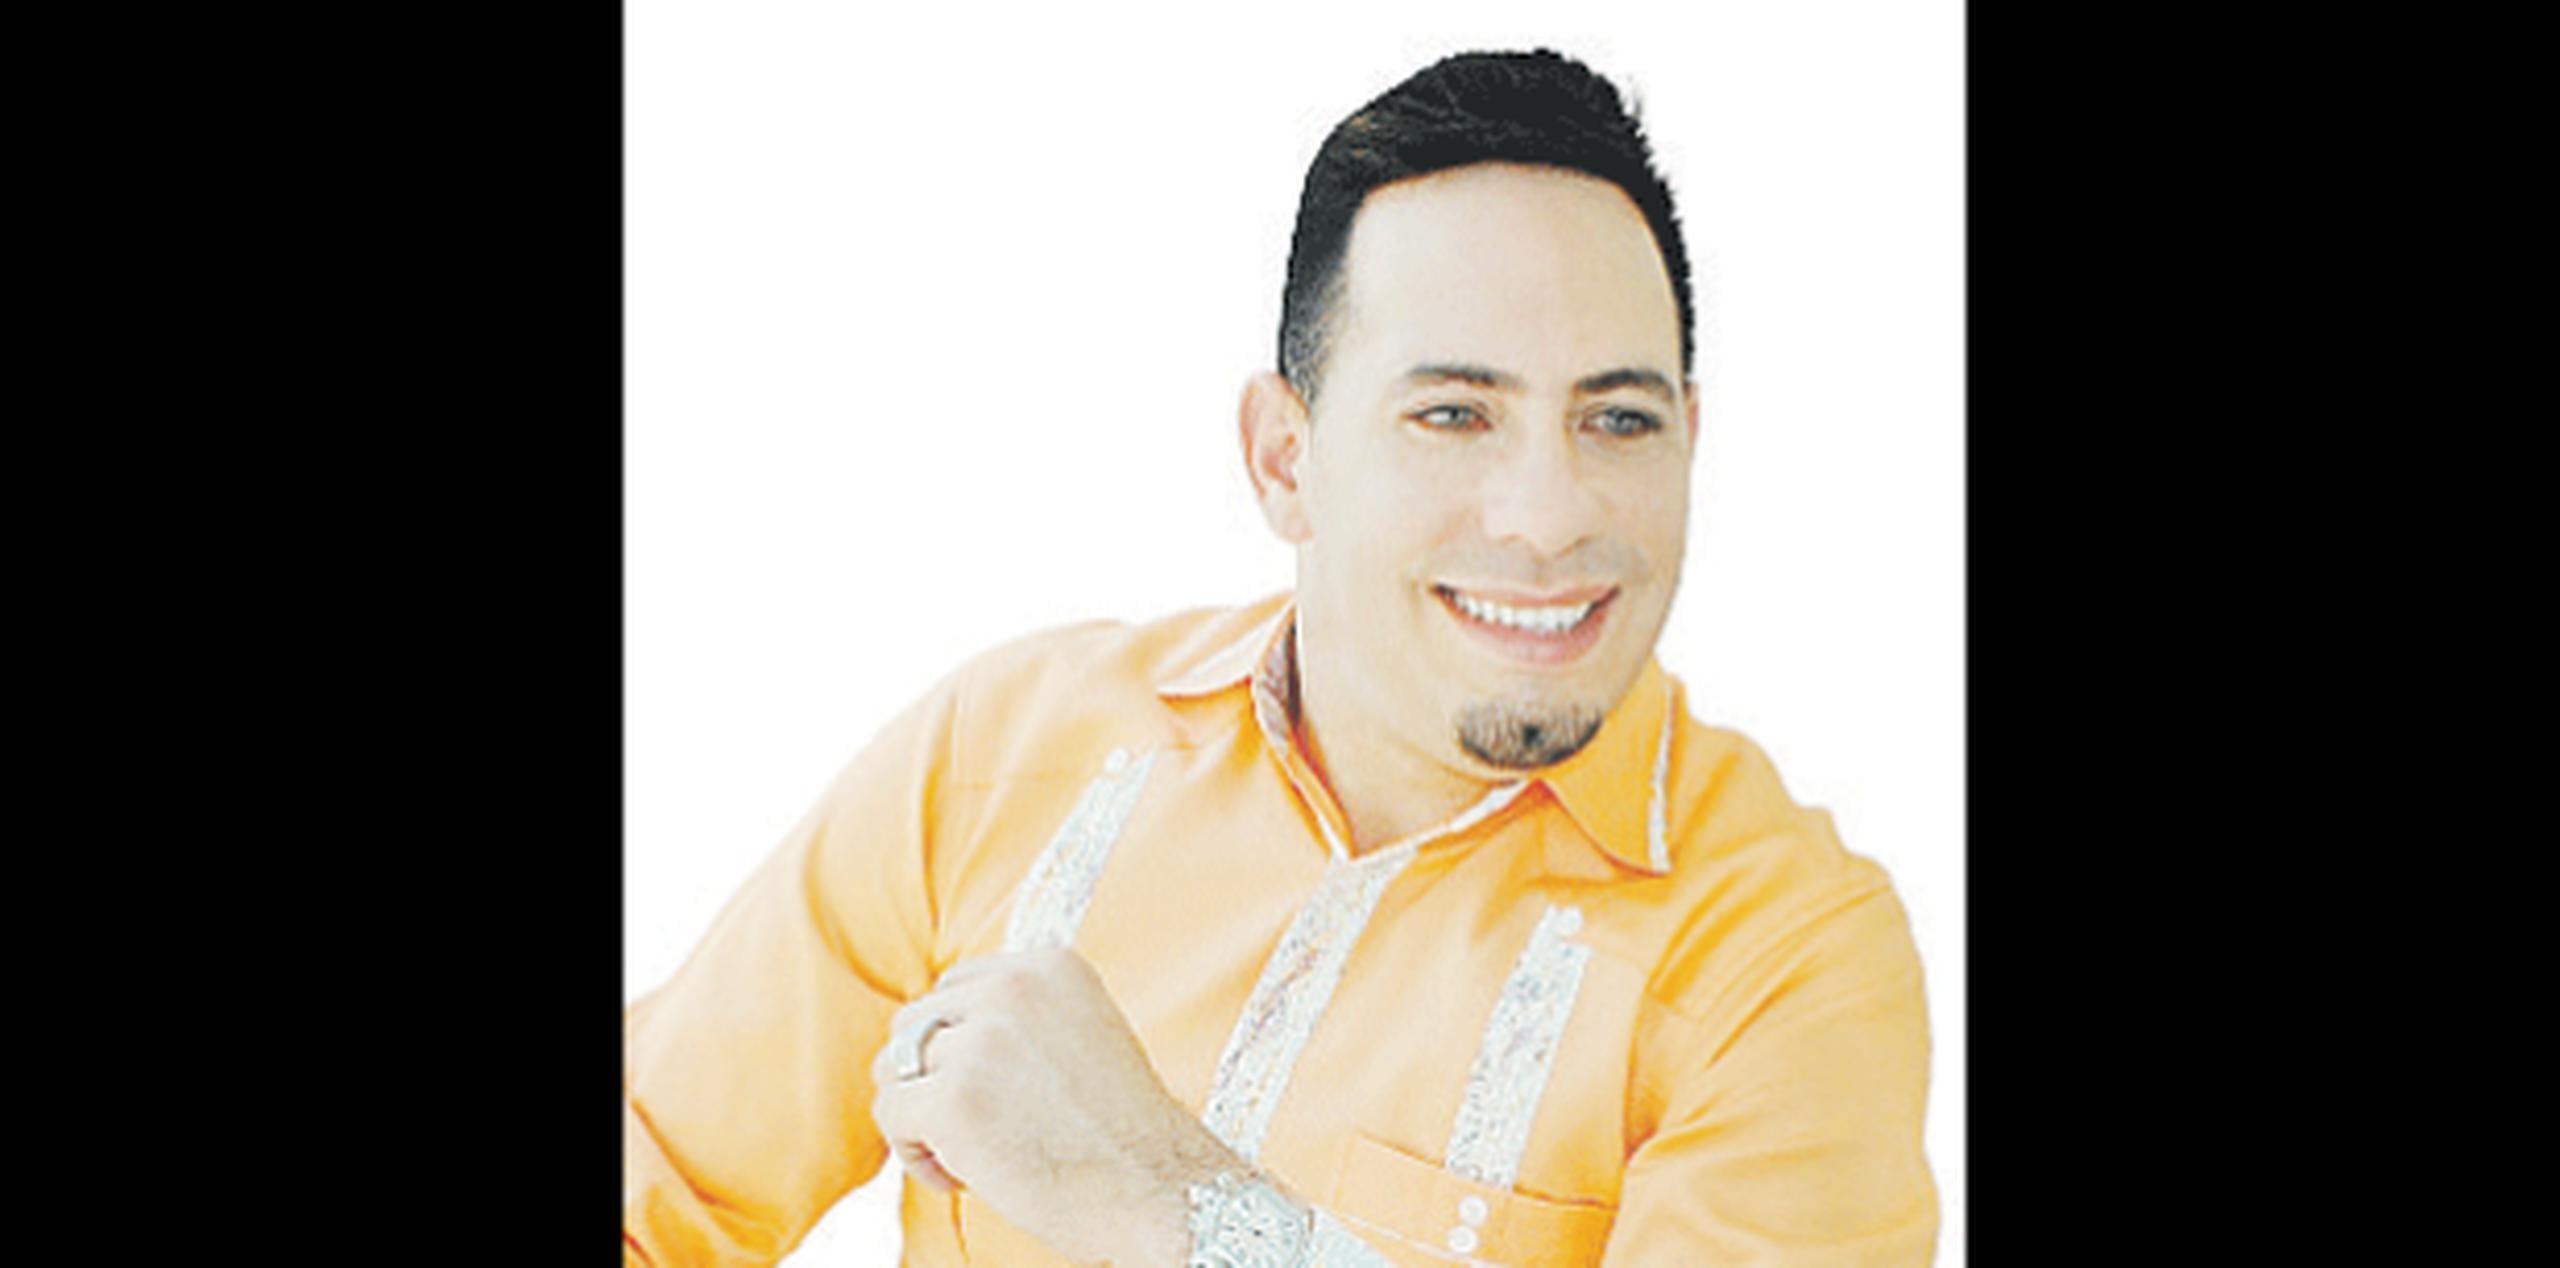 Santiago Torres Jr. inició su carrera en la música sacra desde el 1998. (SUMINISTRADA)